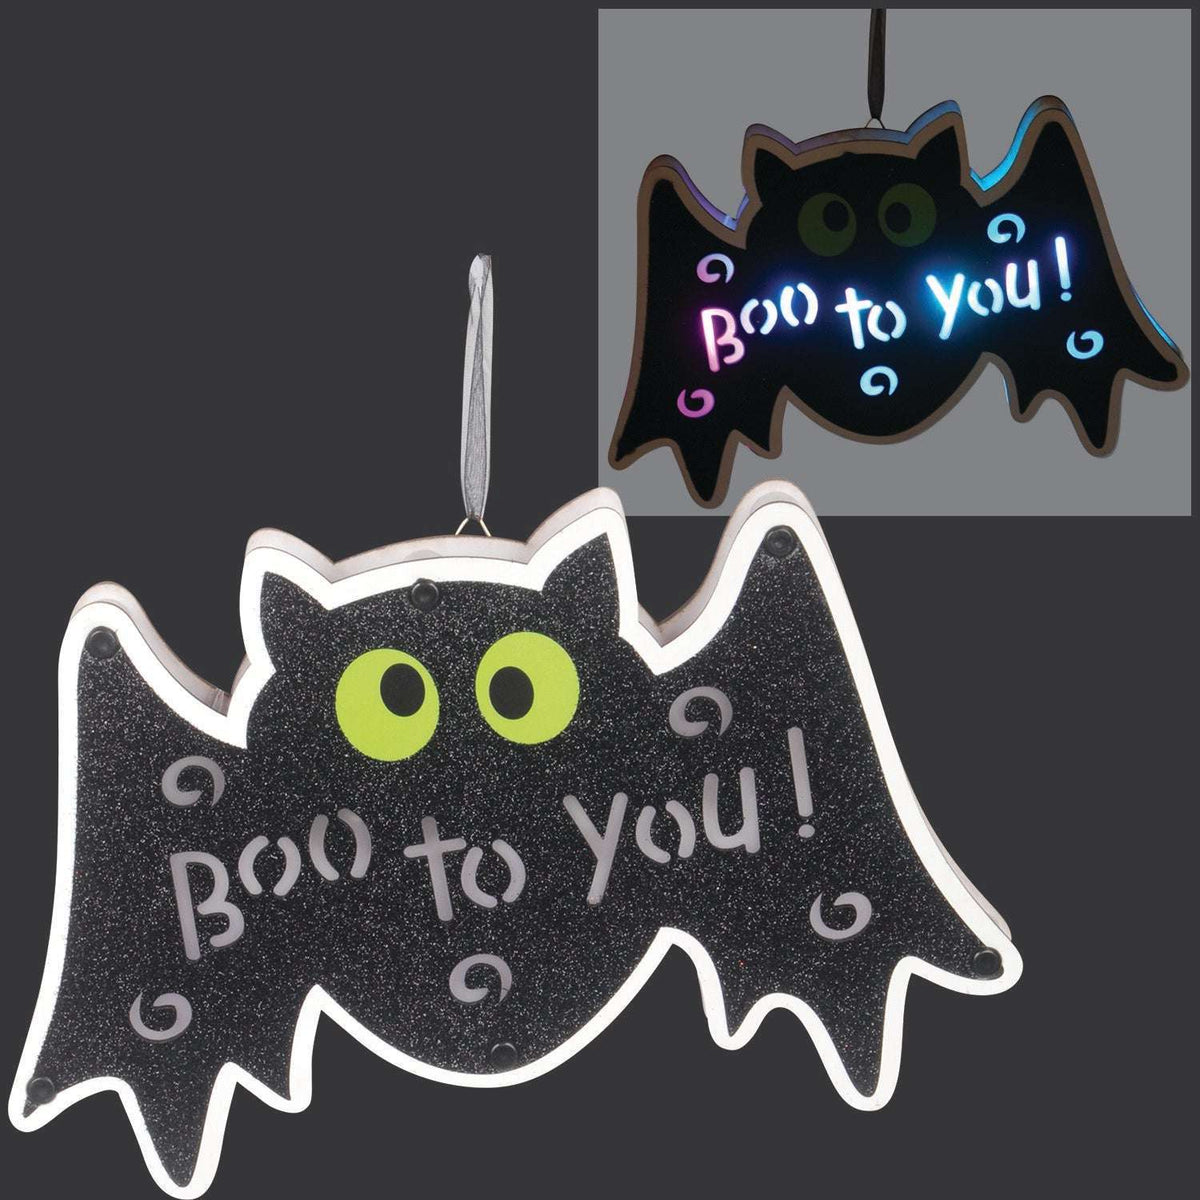 Boo to You LED Light Up Bat Decoration